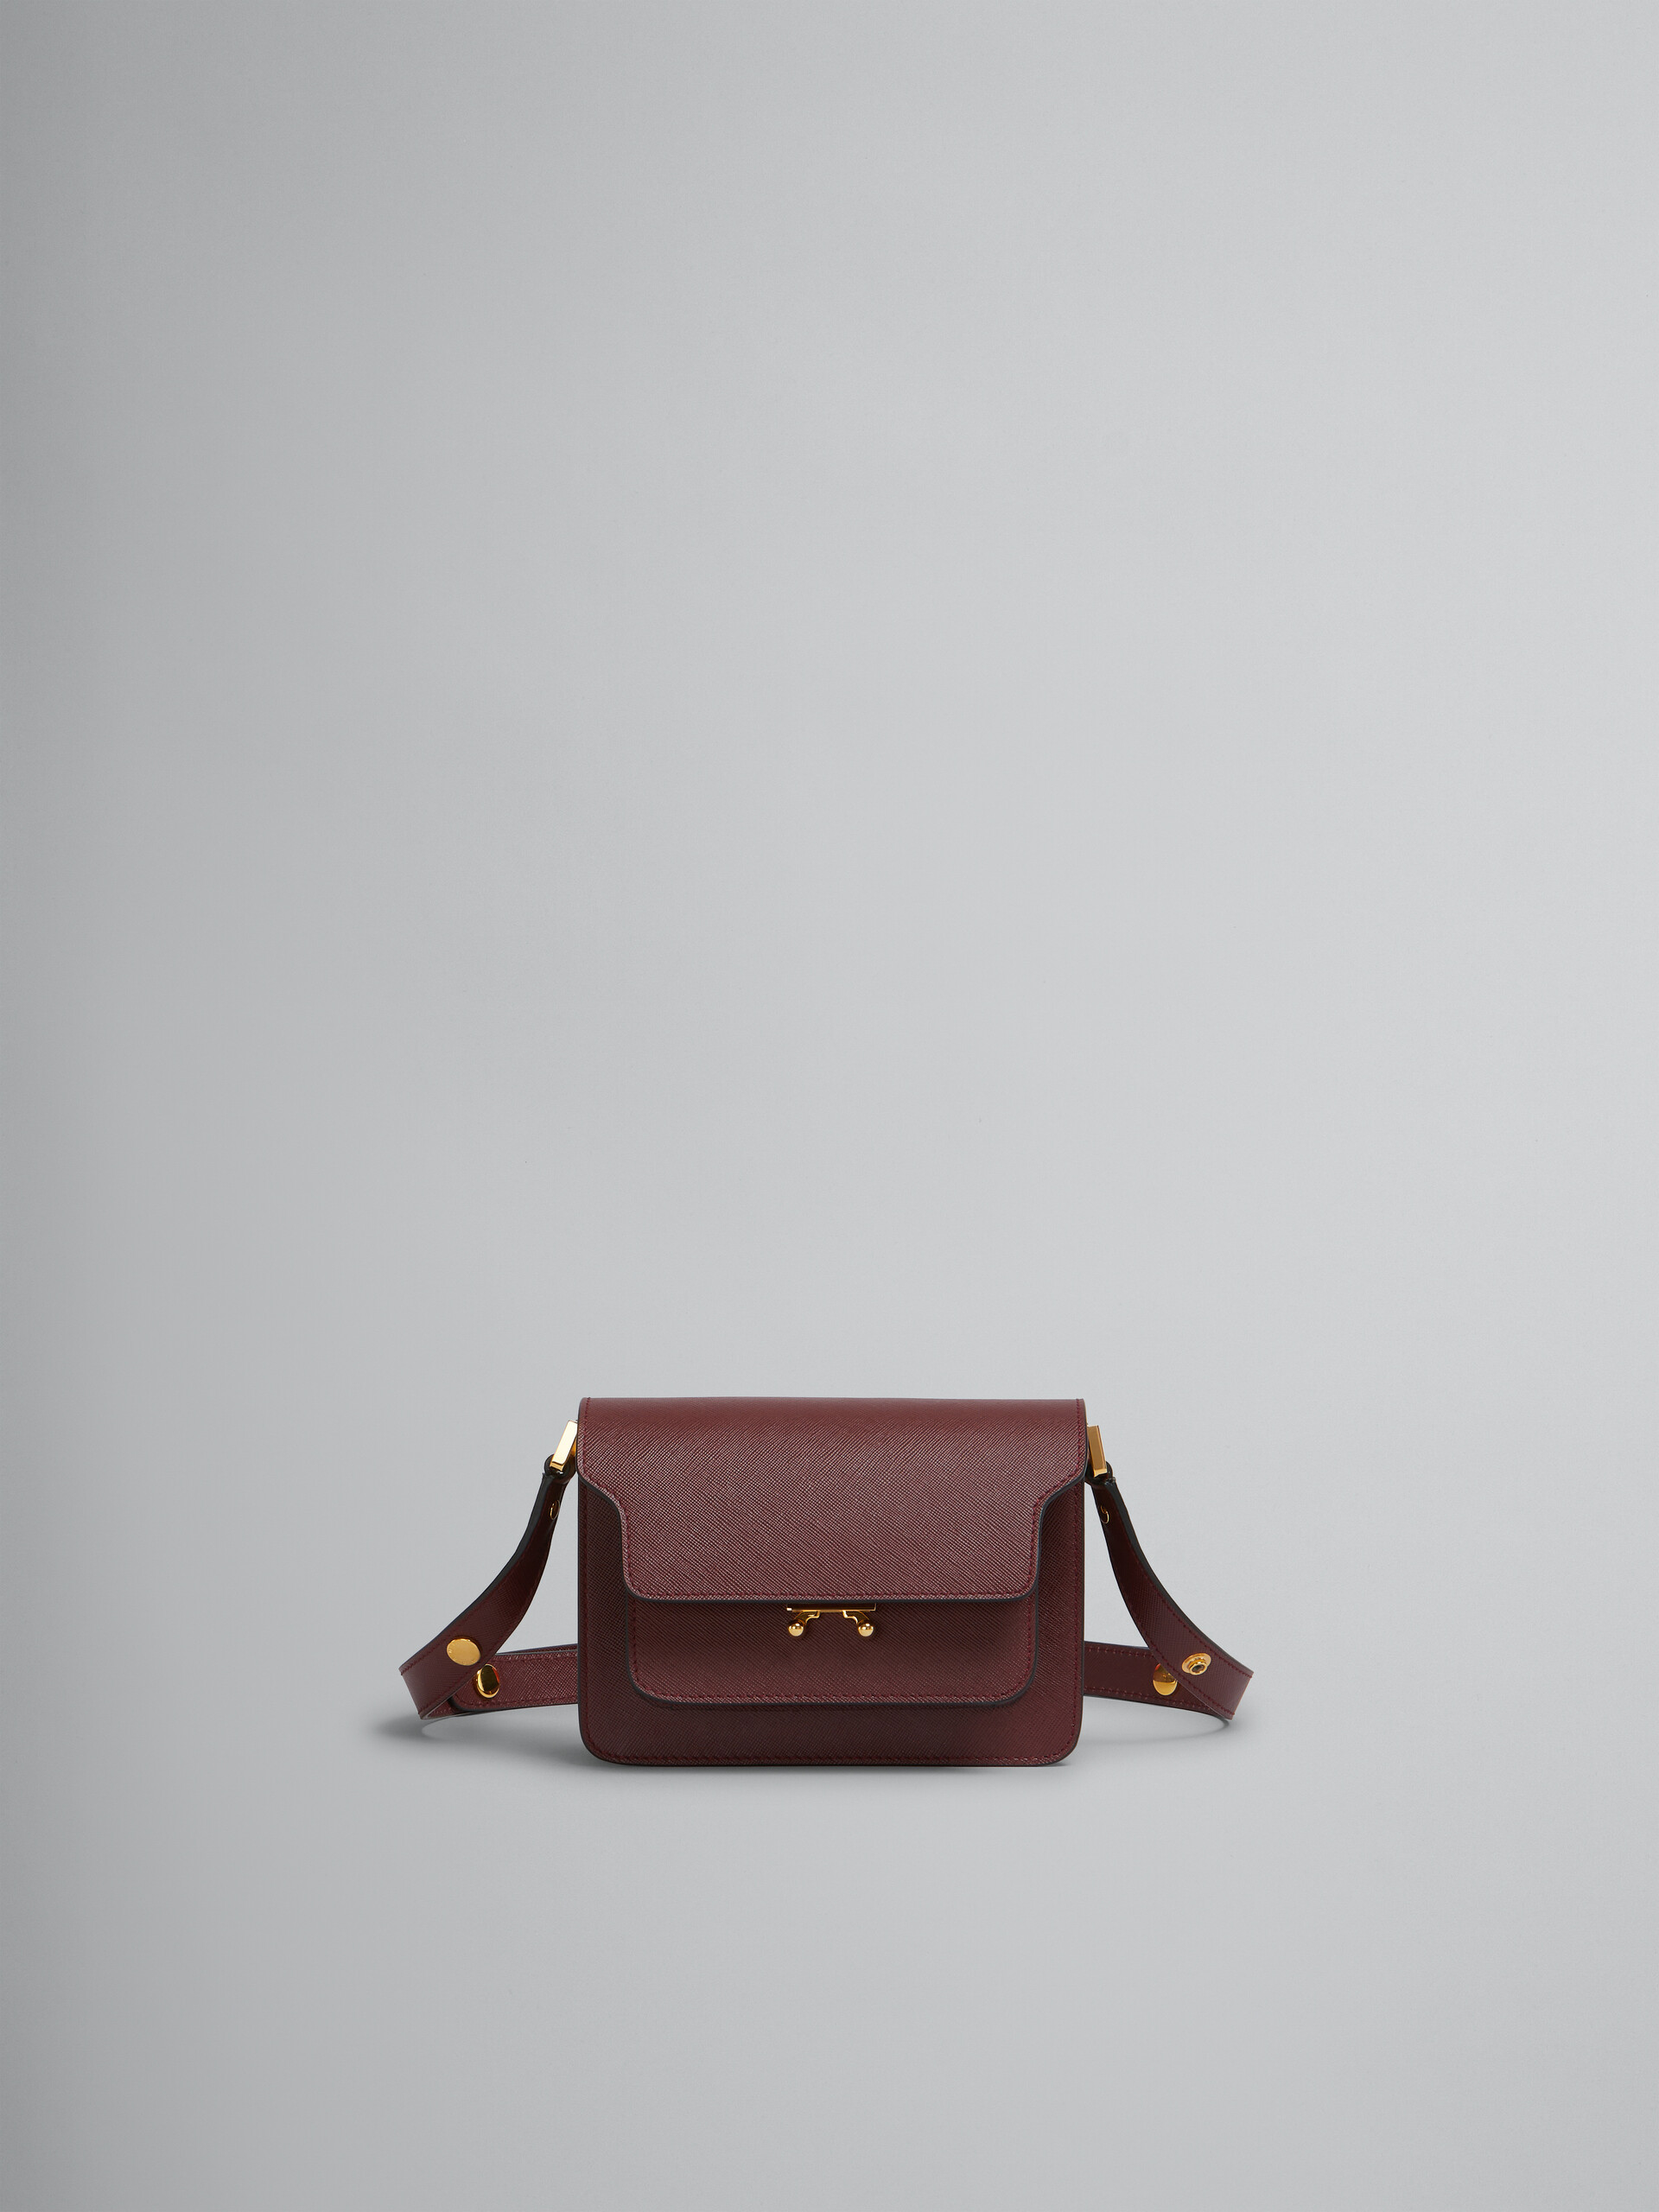 Mini sac Trunk en cuir Saffiano marron - Sacs portés épaule - Image 1